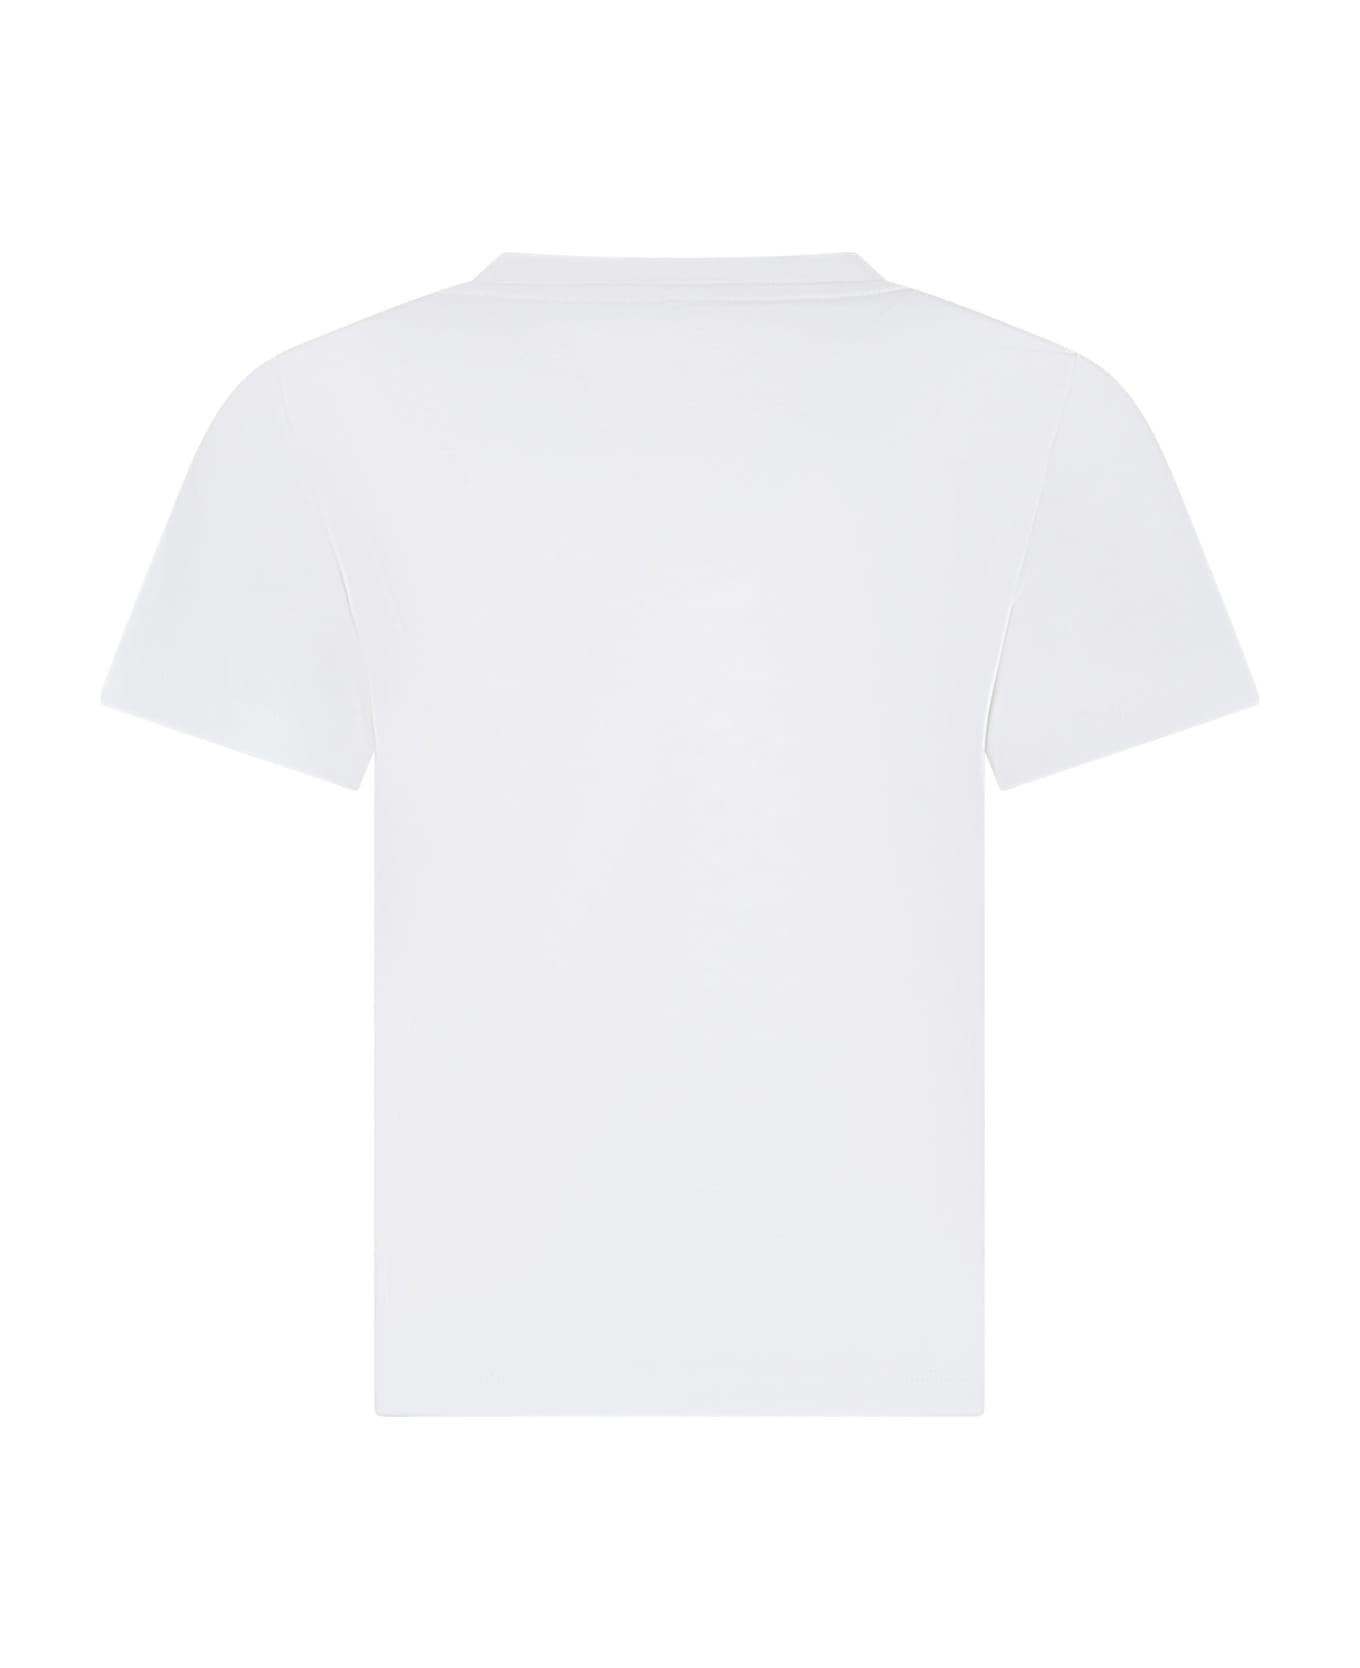 Stella McCartney Kids White T-shirt For Boy With Hammerhead Shark - Ivory